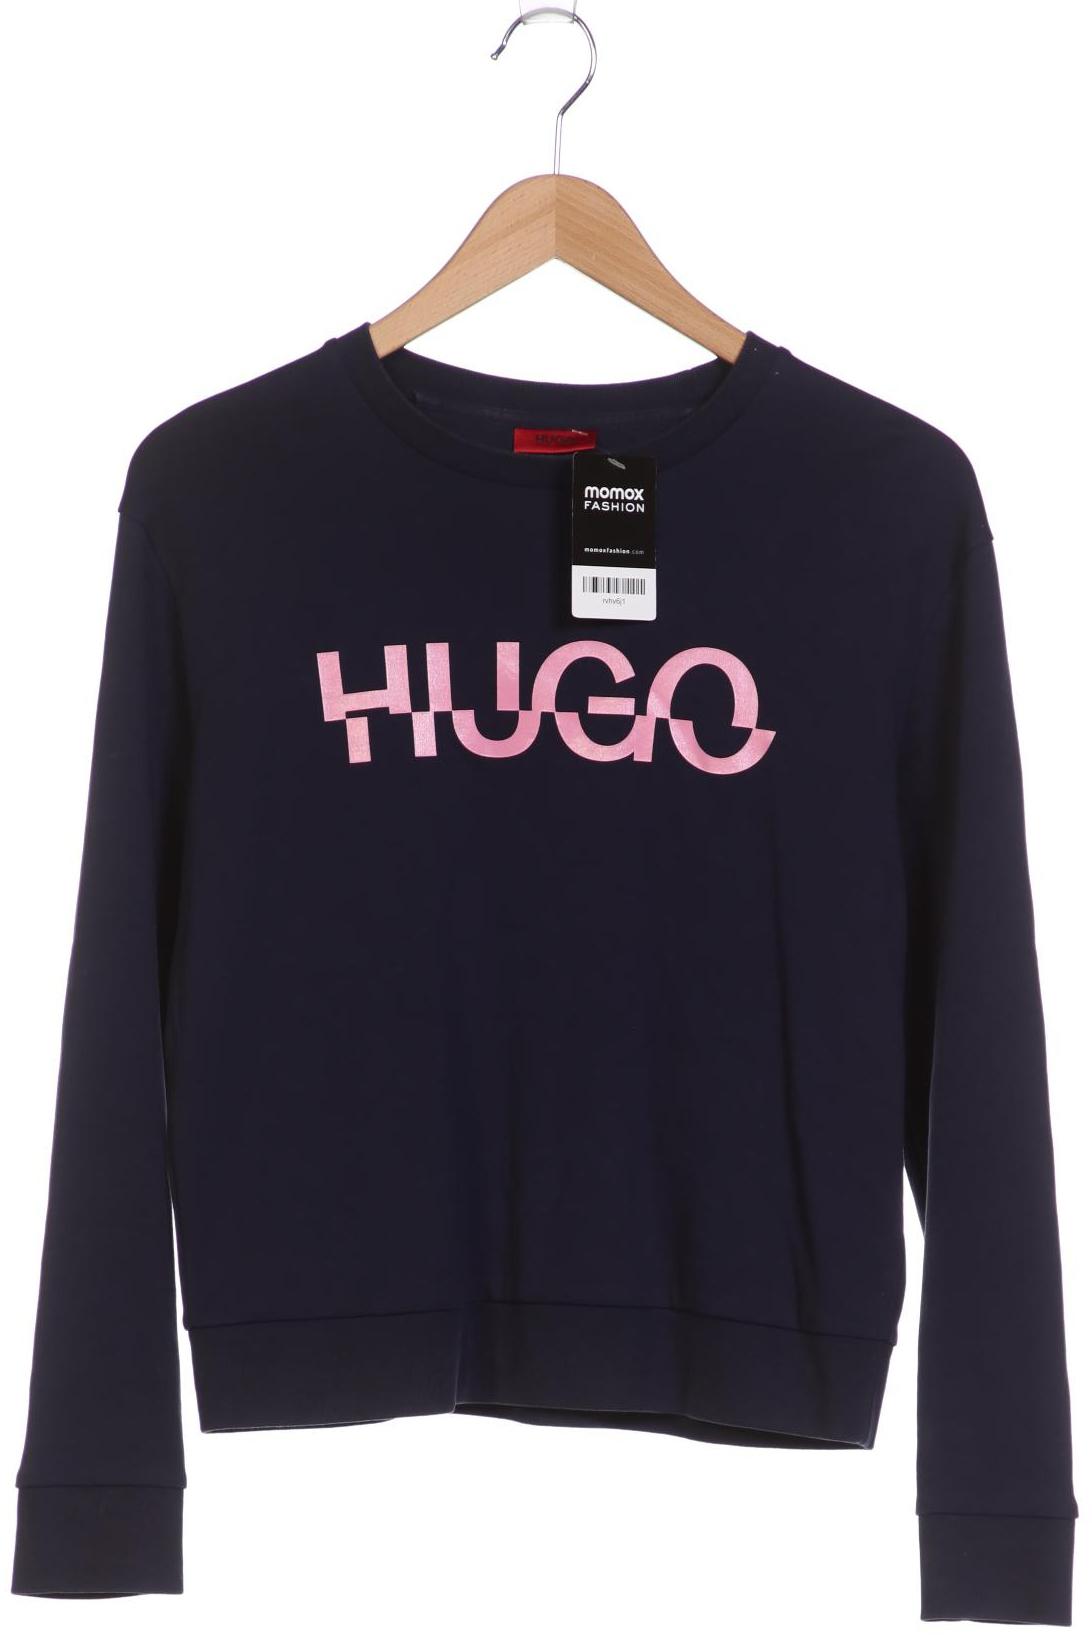 HUGO by Hugo Boss Damen Langarmshirt, marineblau von HUGO by Hugo Boss